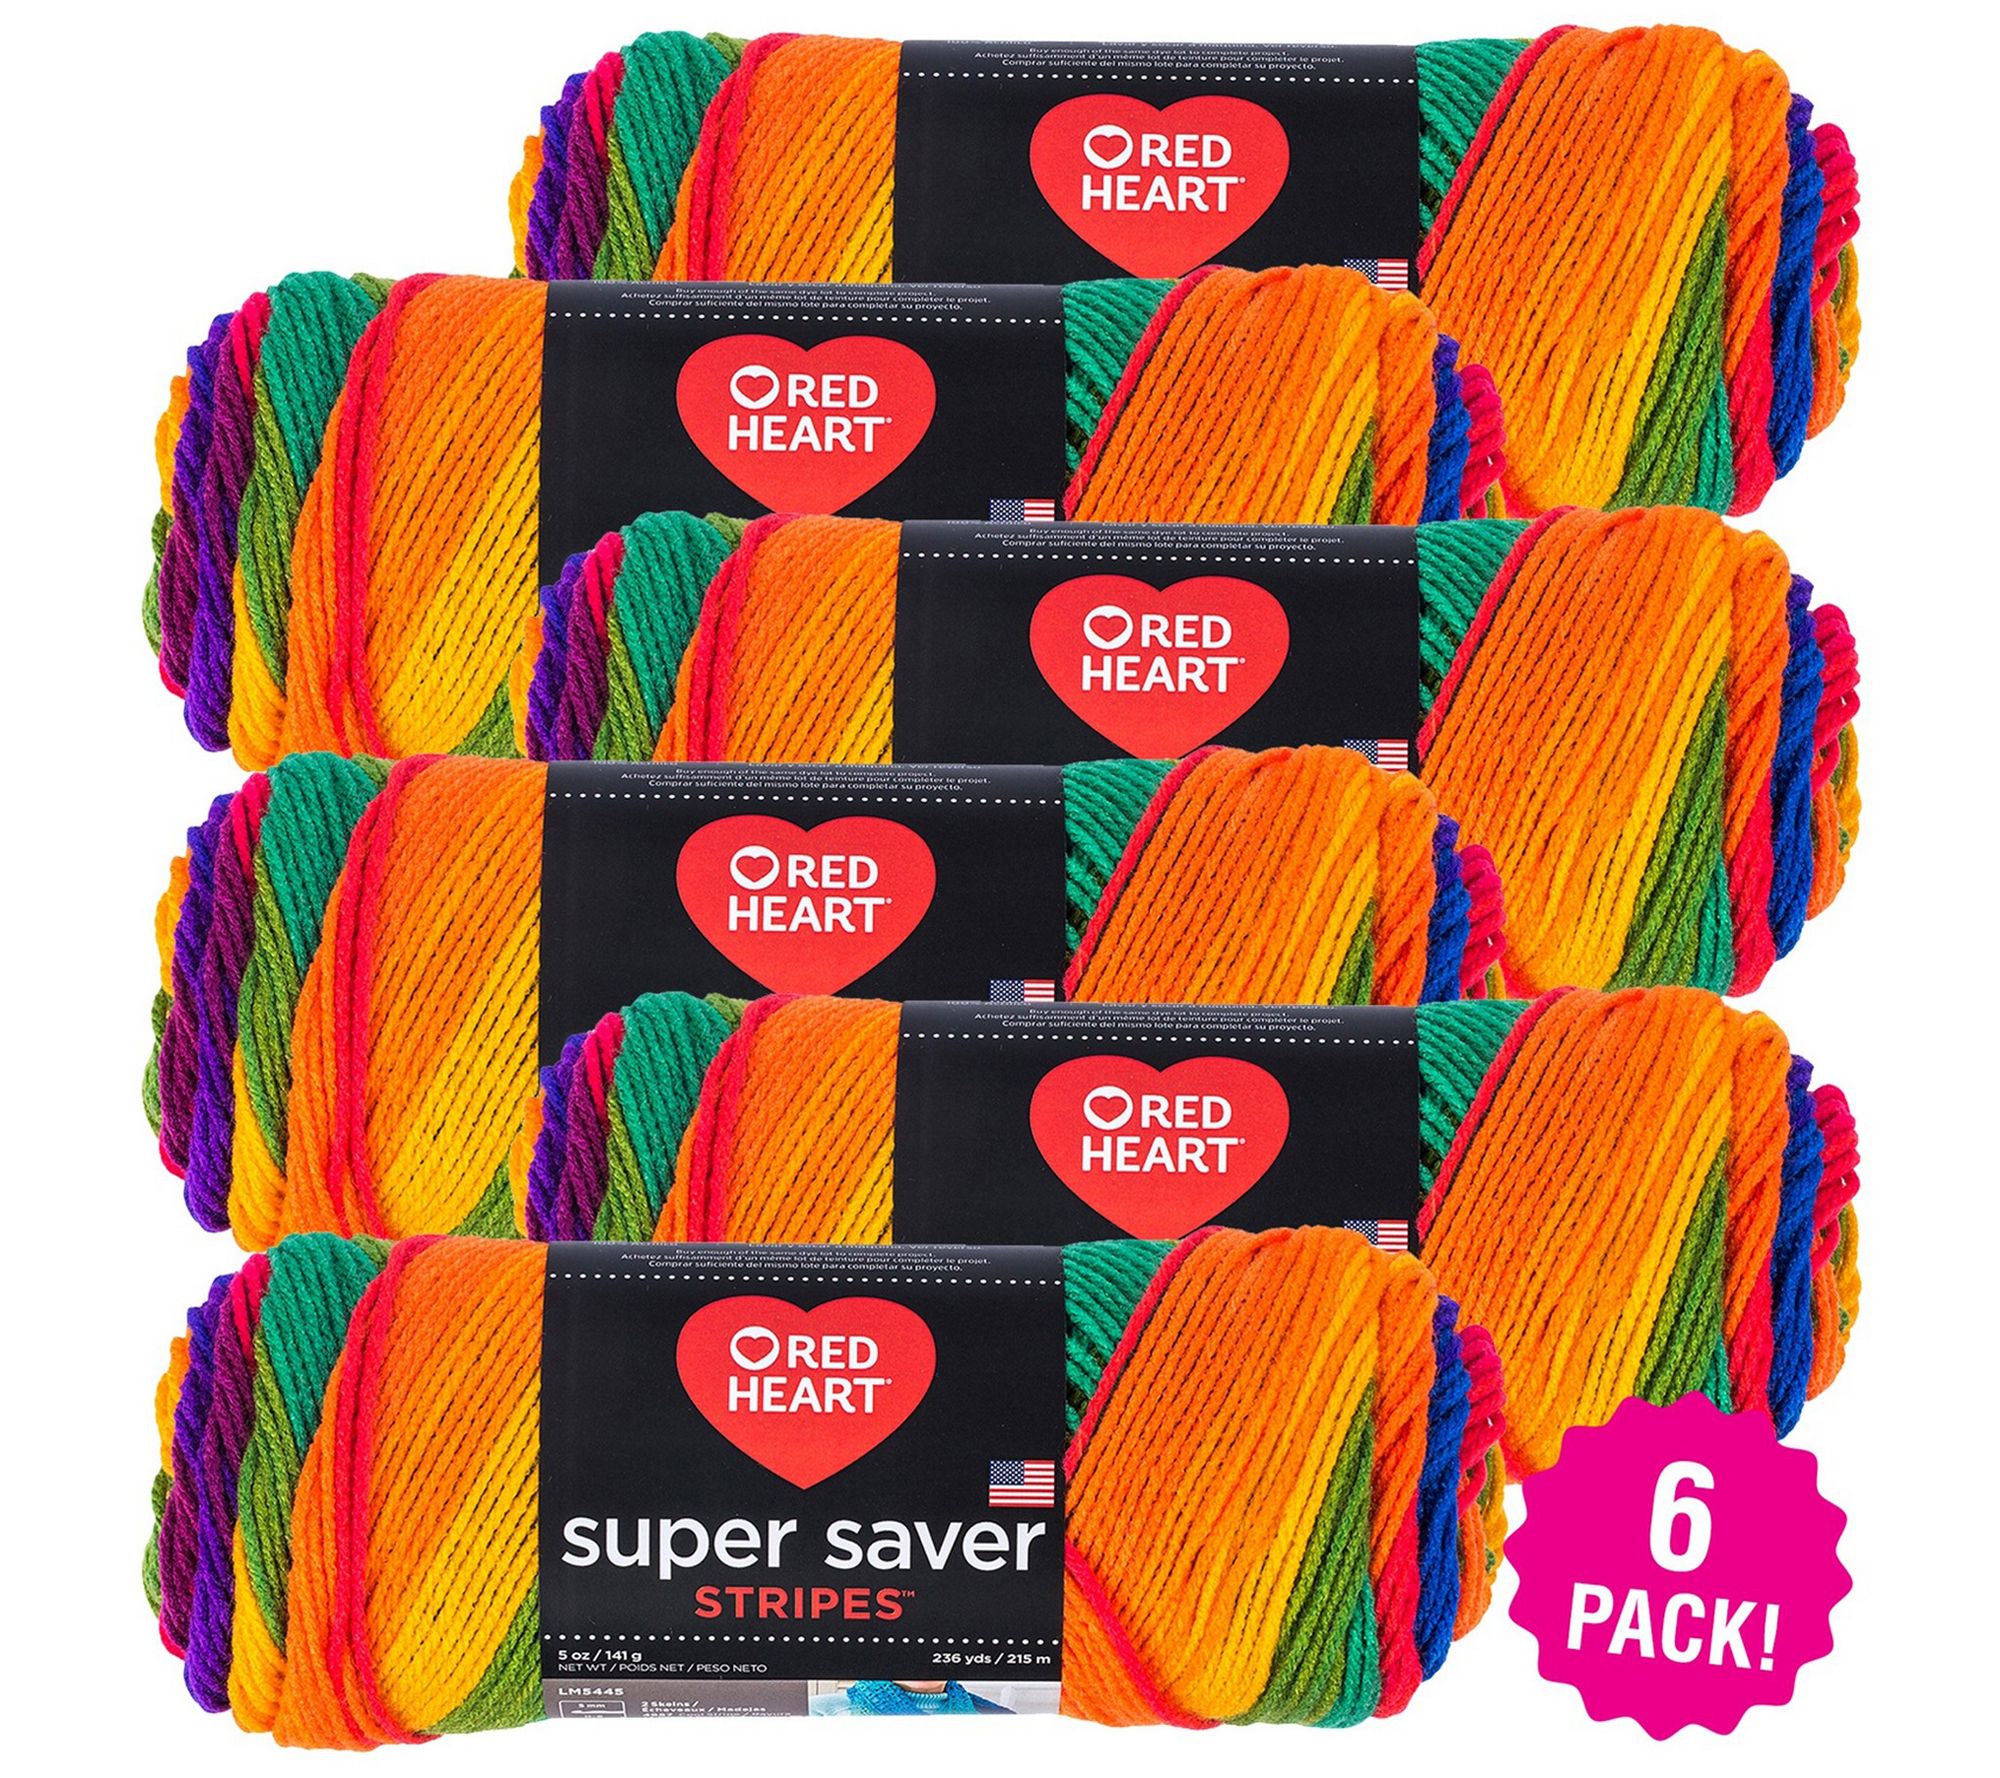 Red Heart Super Saver Yarn - Favorite Stripe